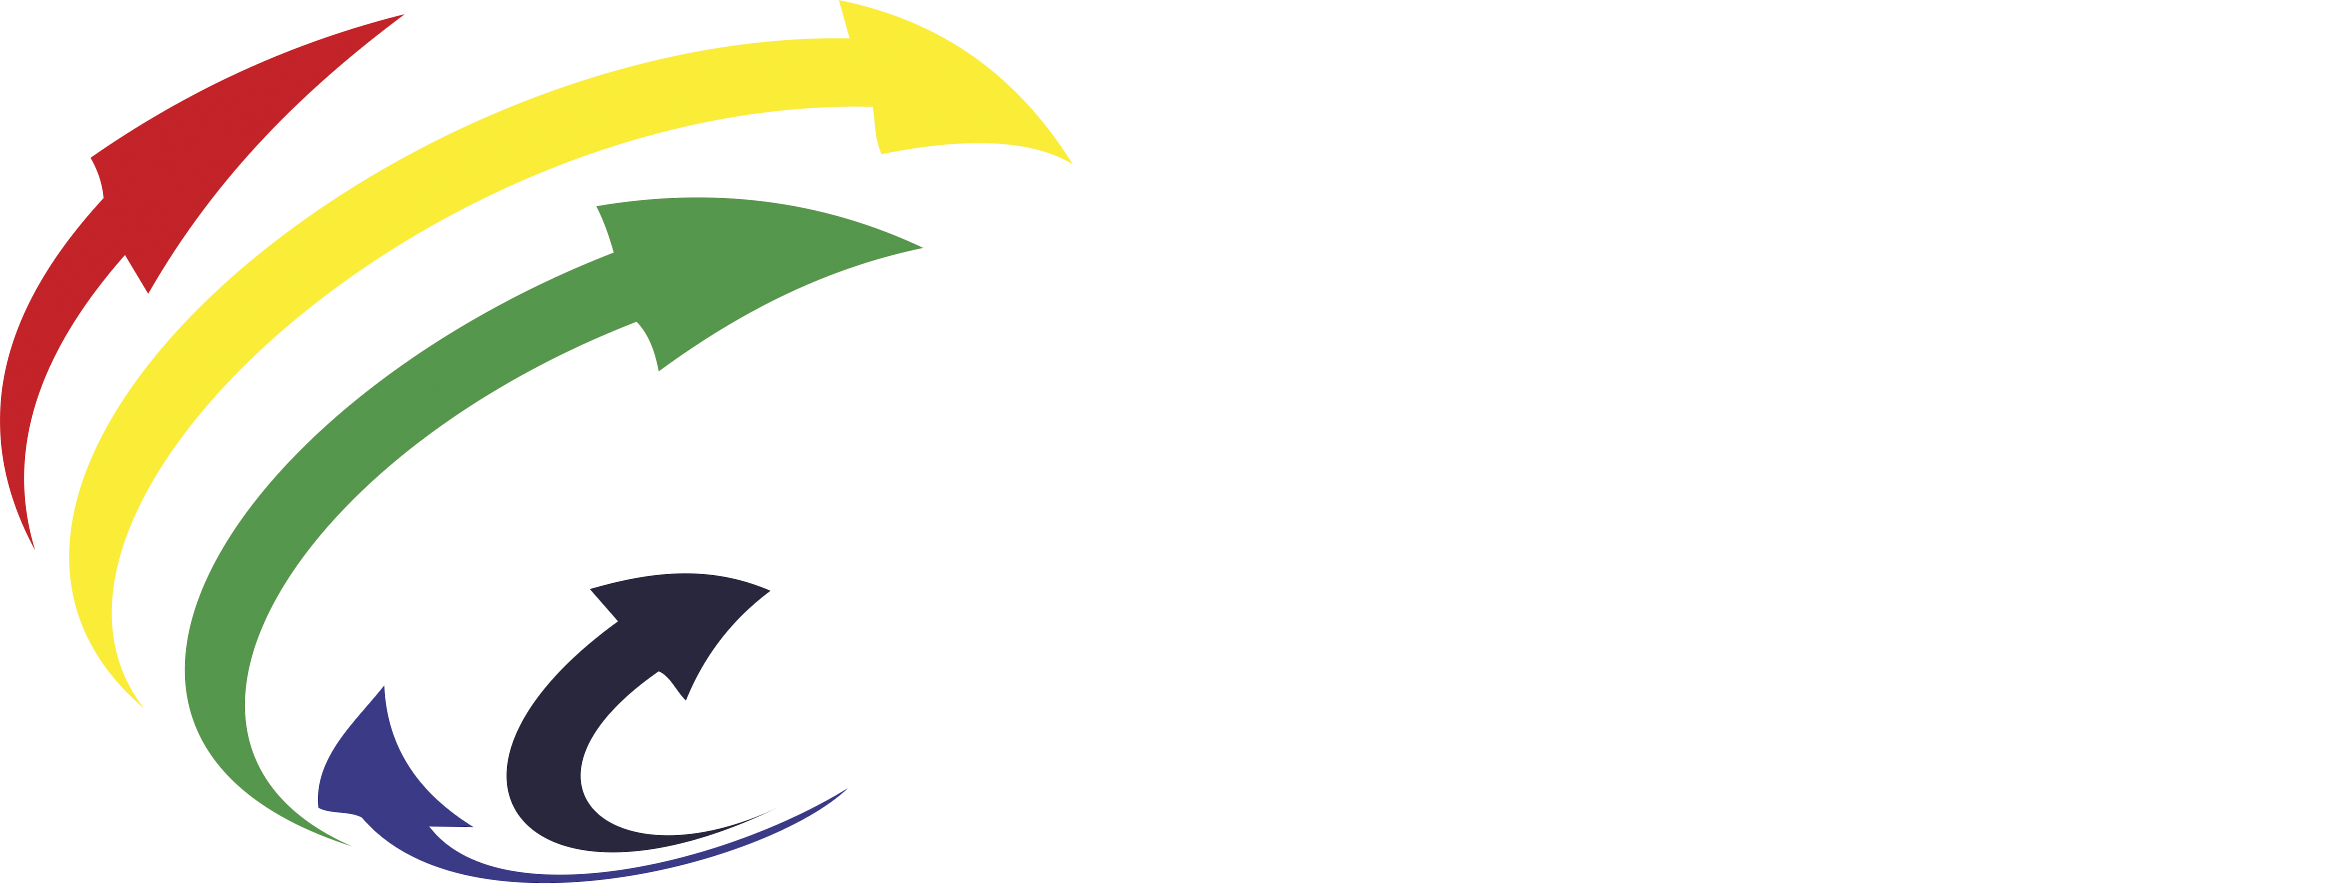 Sindicato N1 - Trade Union (2330x884)